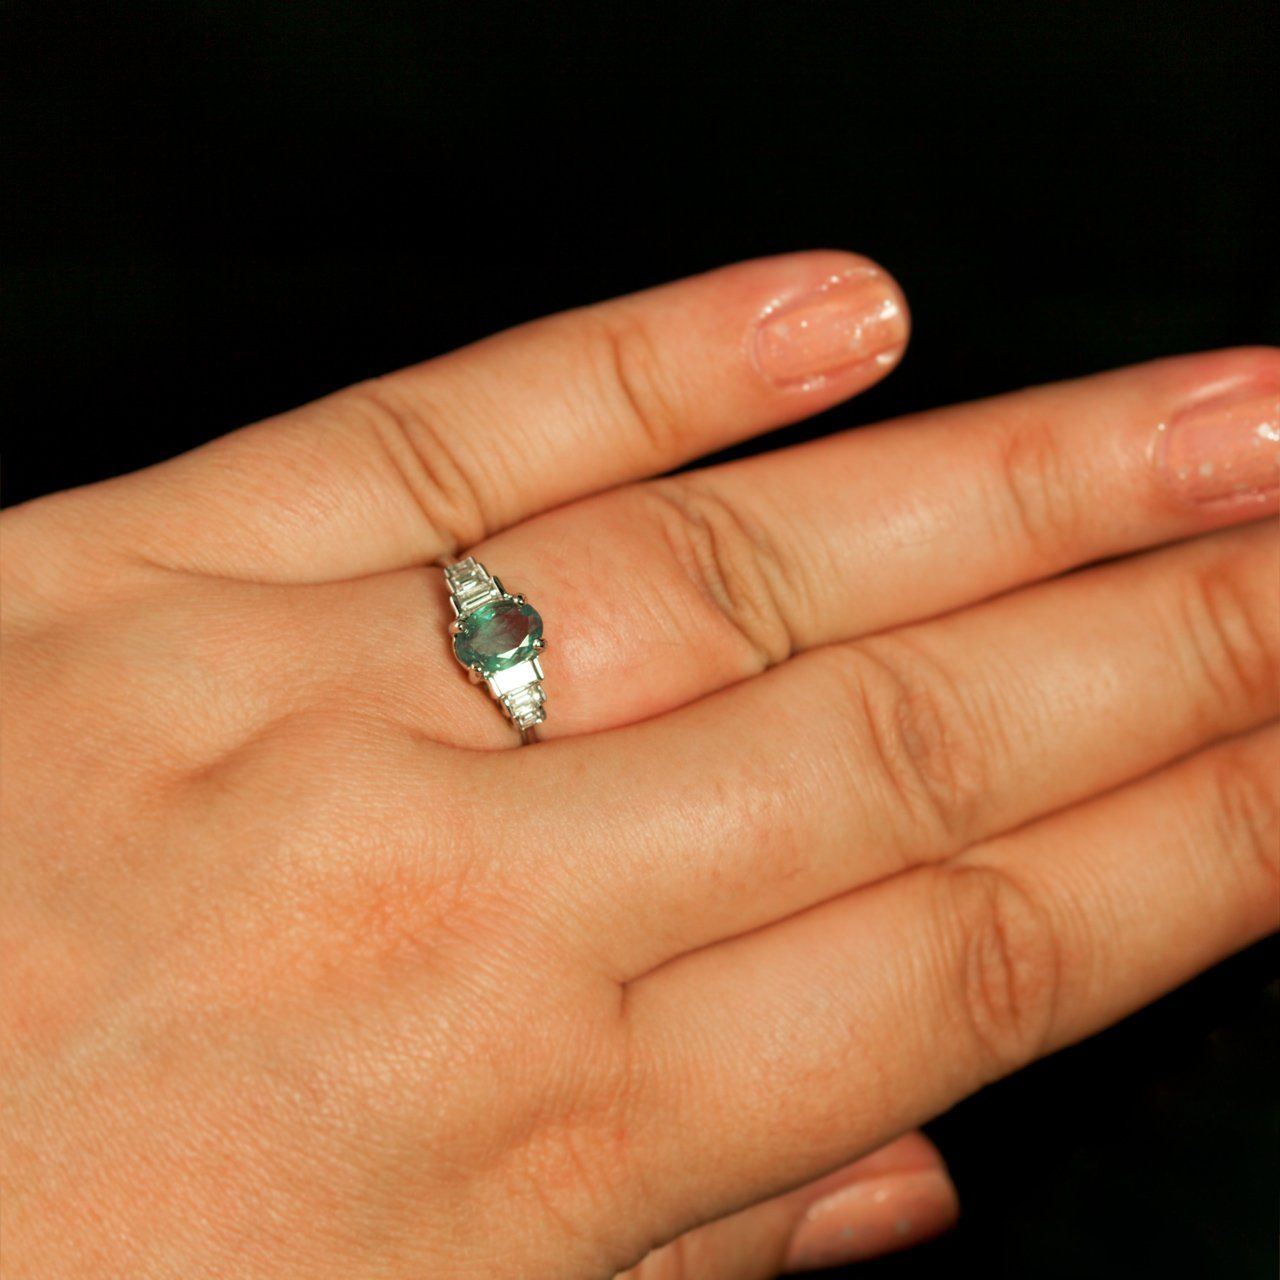 June Birthstone! $6000 Brilliant Natural Alexandrite Diamond 18k White Gold Engagement Ring - The Alexandrite